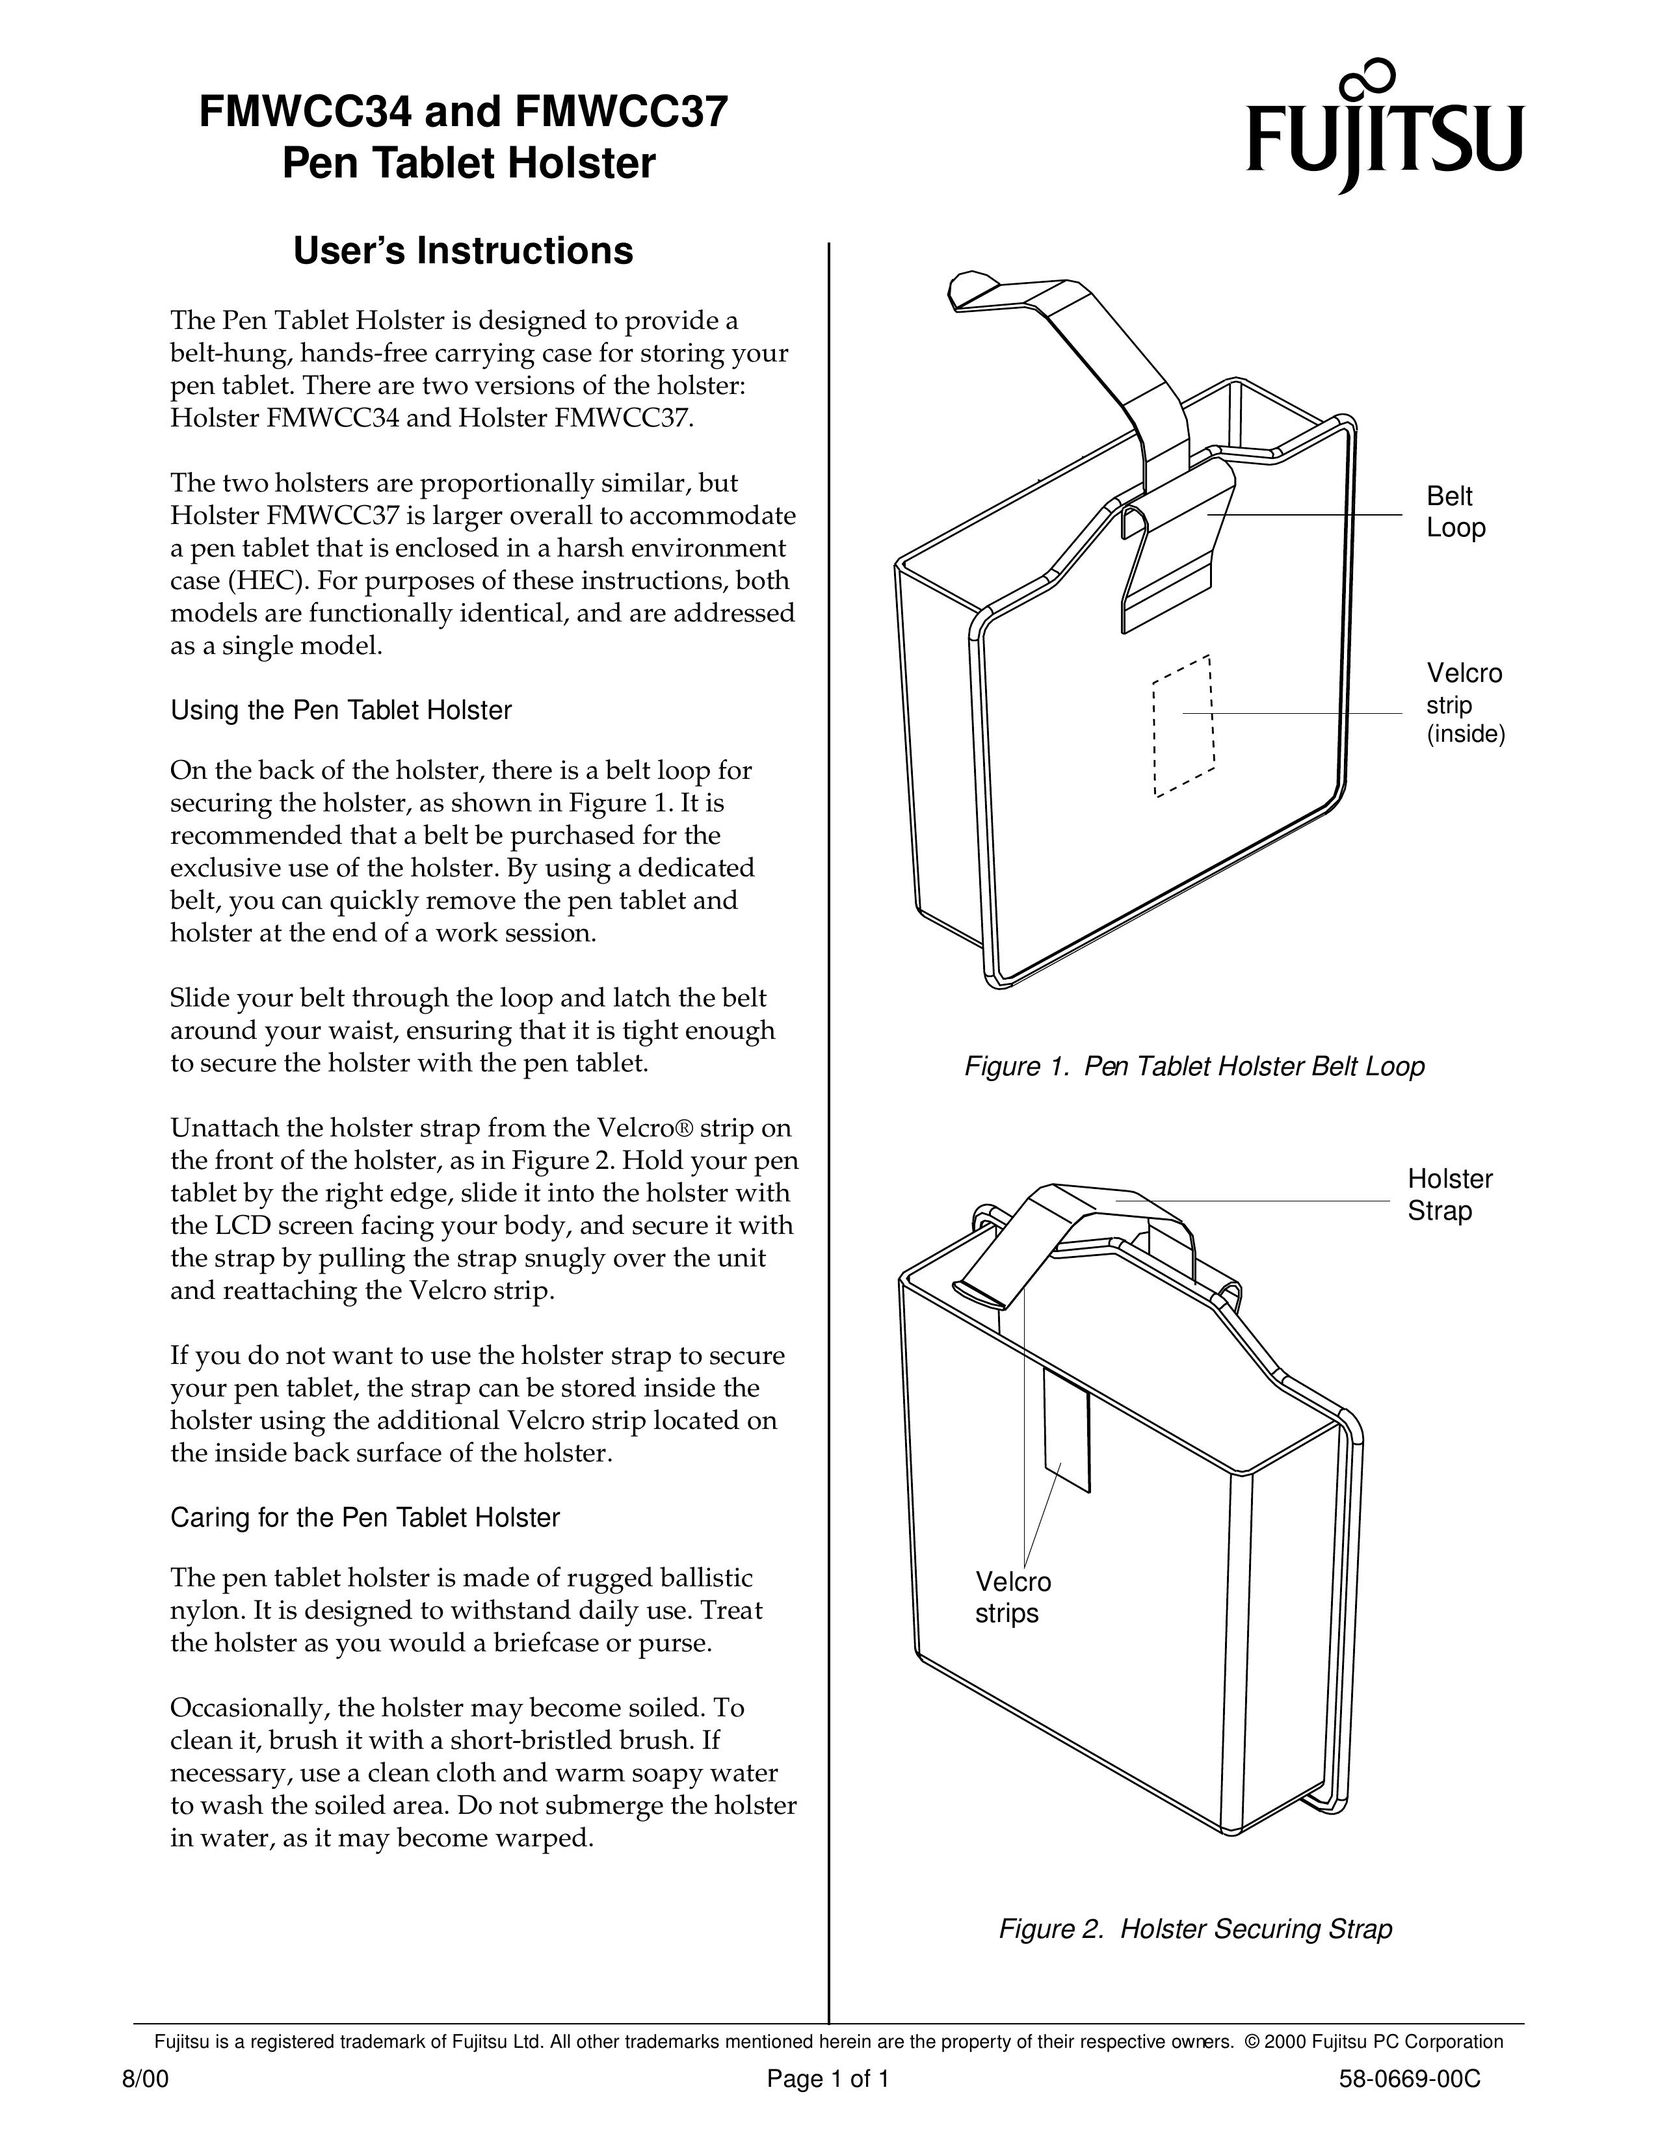 Fujitsu FMWCC37 Carrying Case User Manual